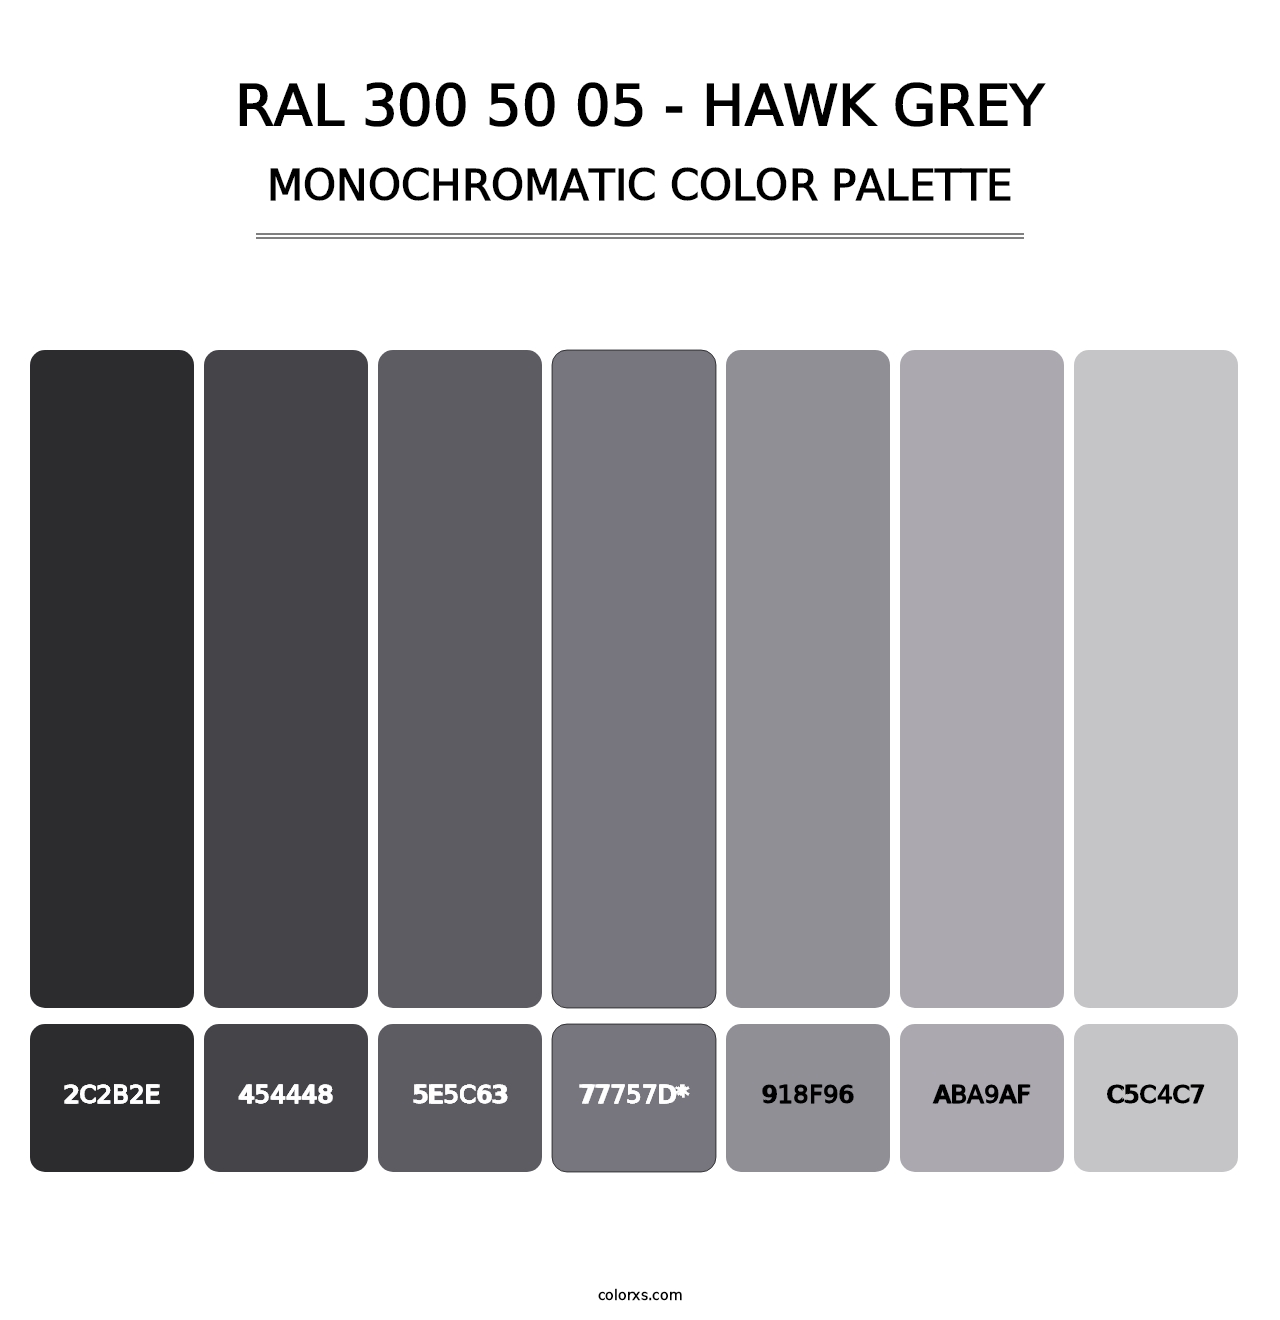 RAL 300 50 05 - Hawk Grey - Monochromatic Color Palette